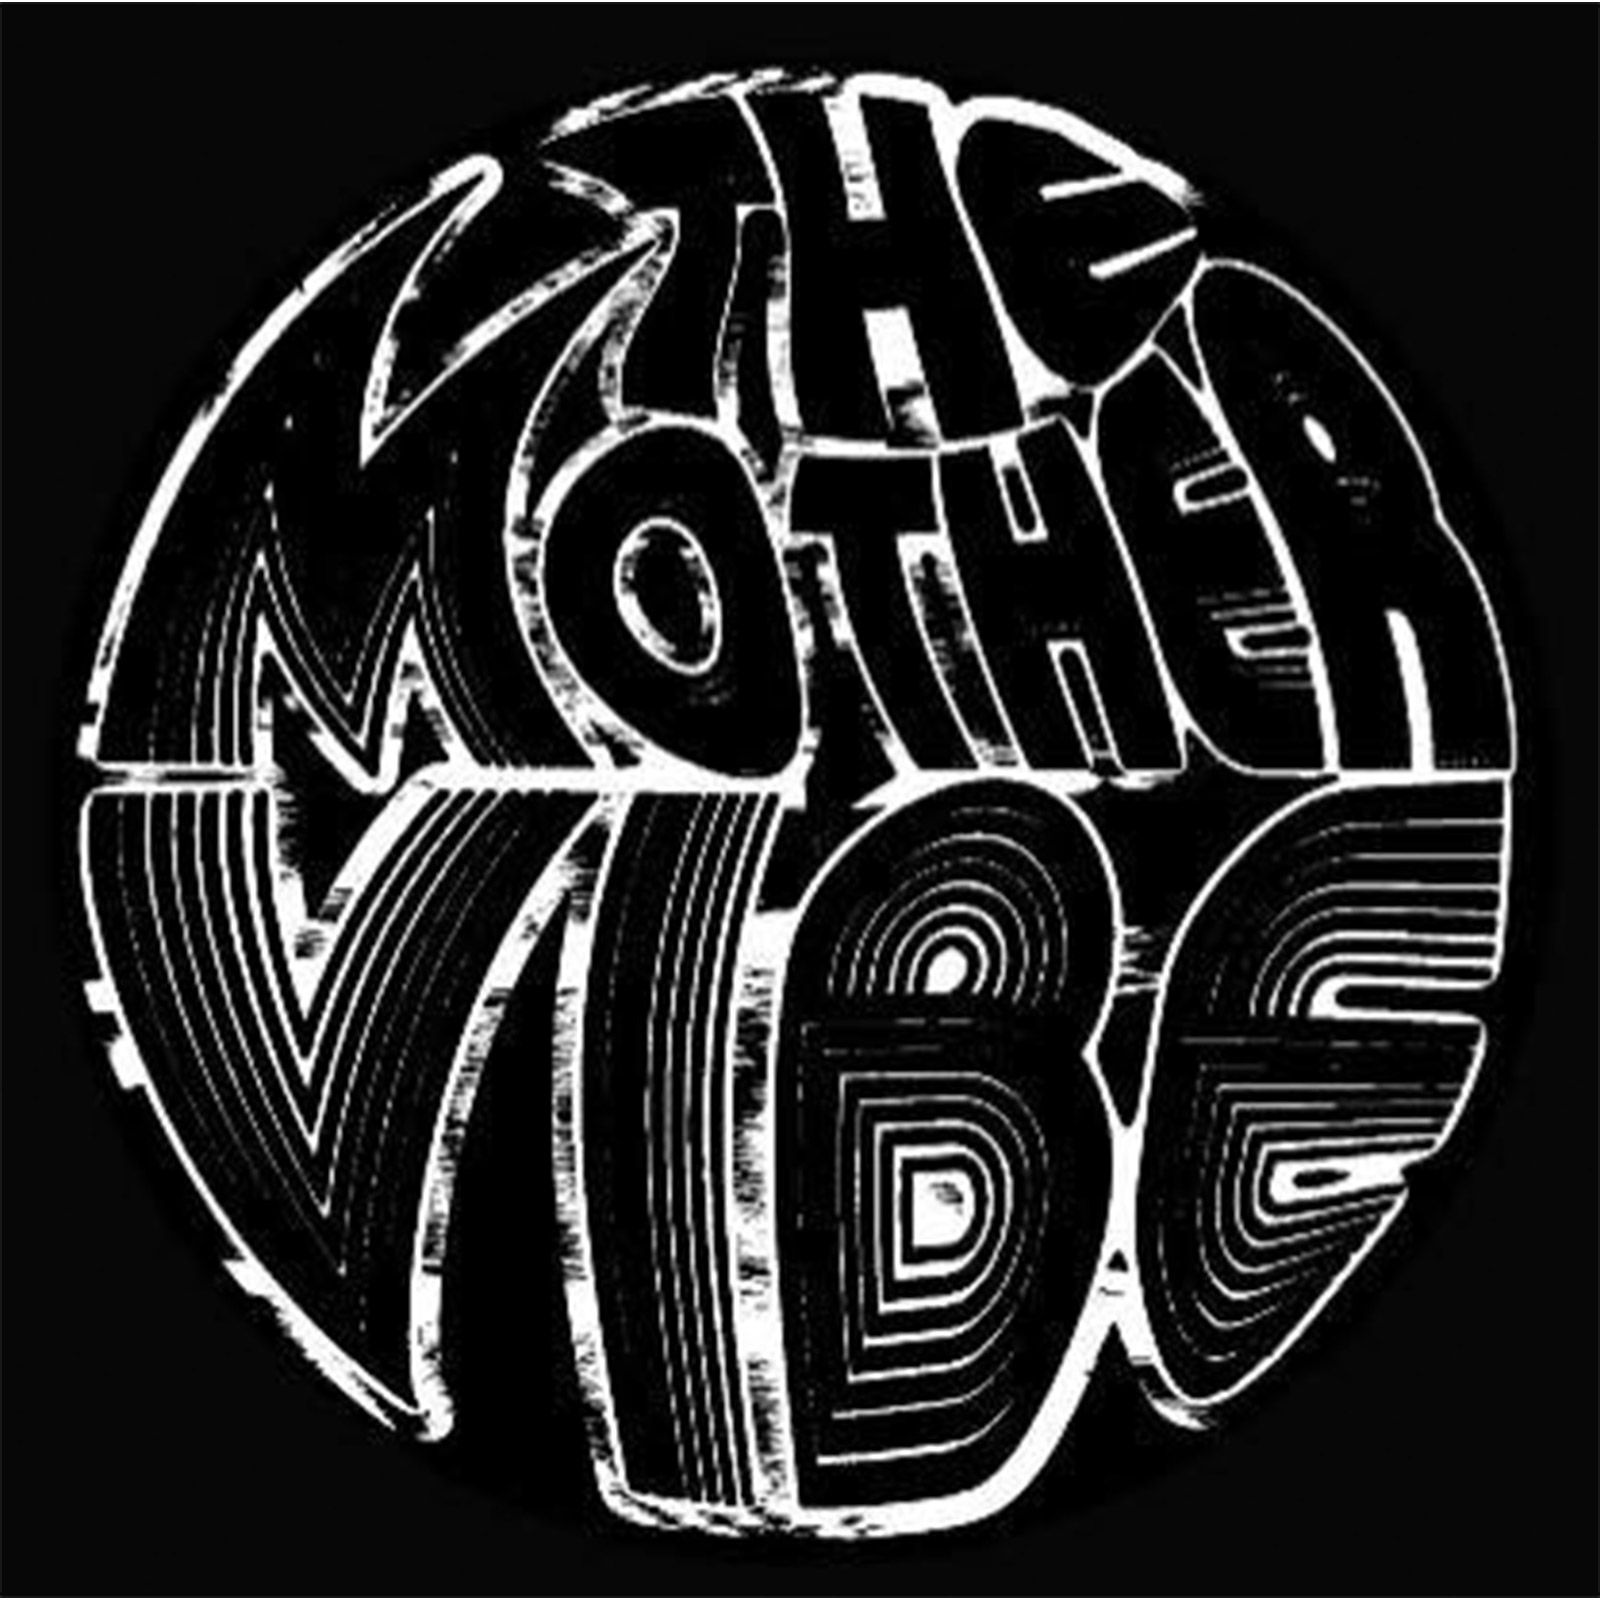 The Mother vibe - Aye Aye